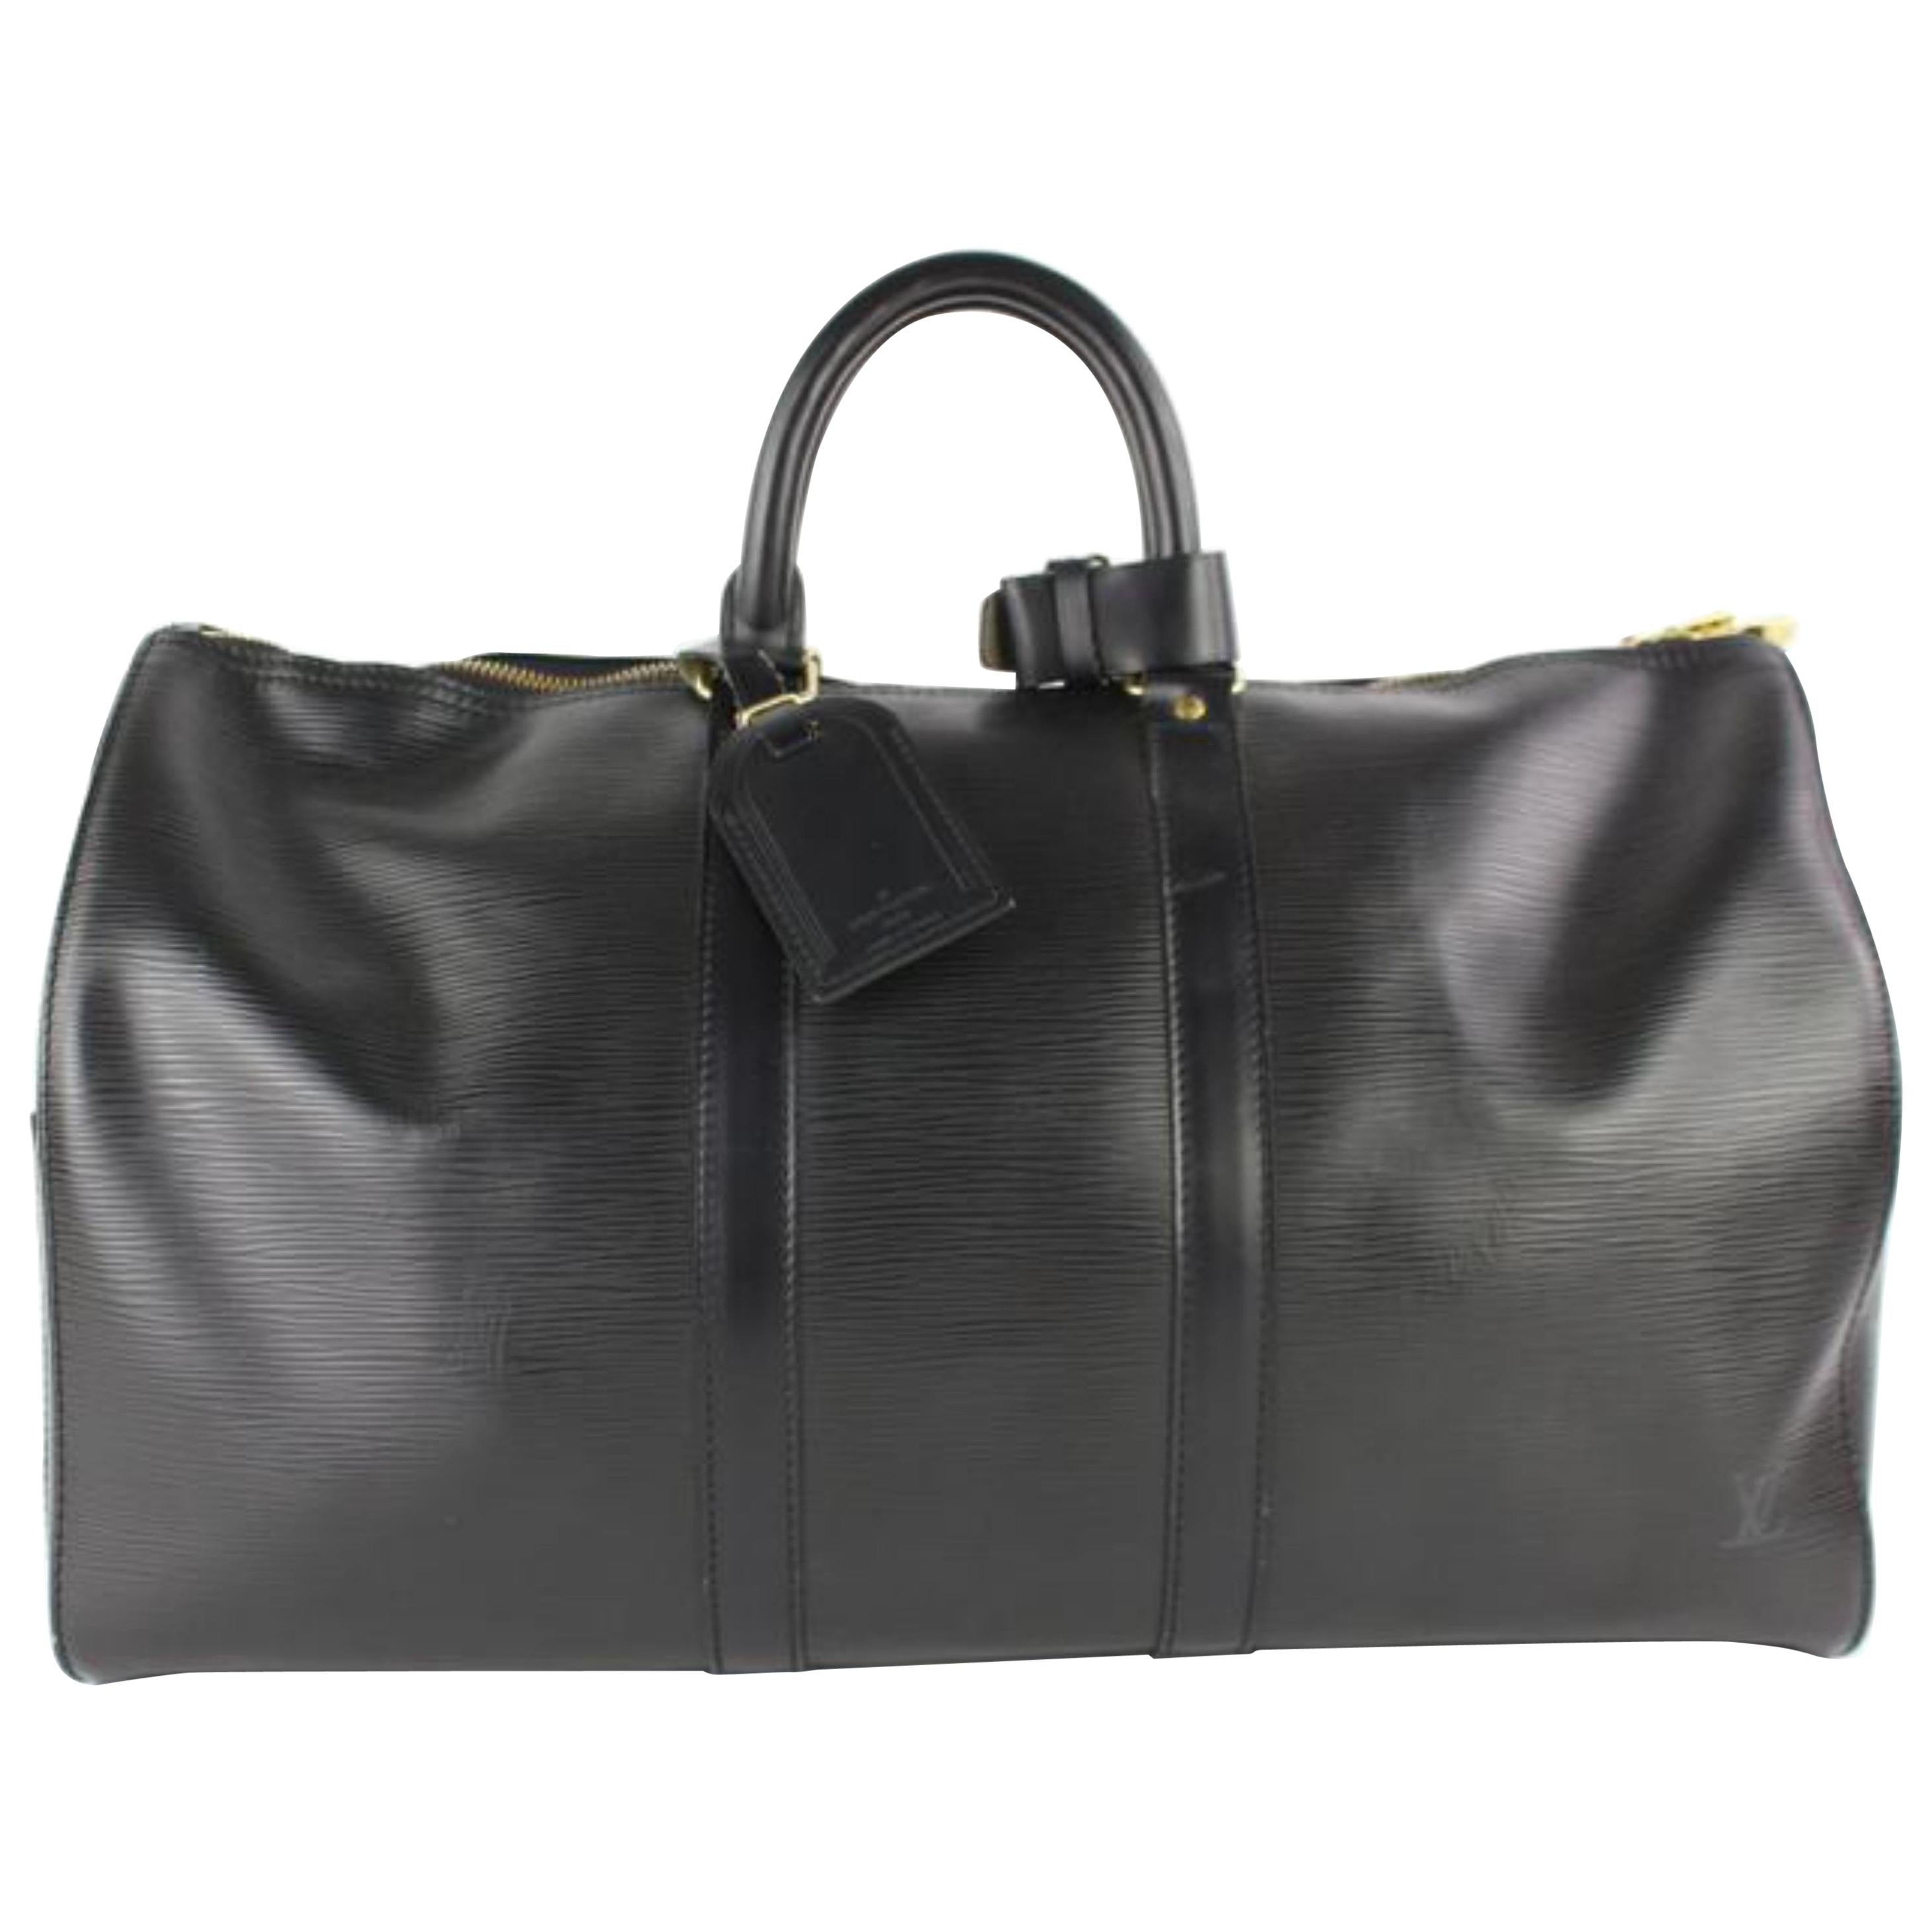 Louis Vuitton Keepall Duffle Noir 45 5lz0129 Black Leather Weekend/Travel Bag For Sale